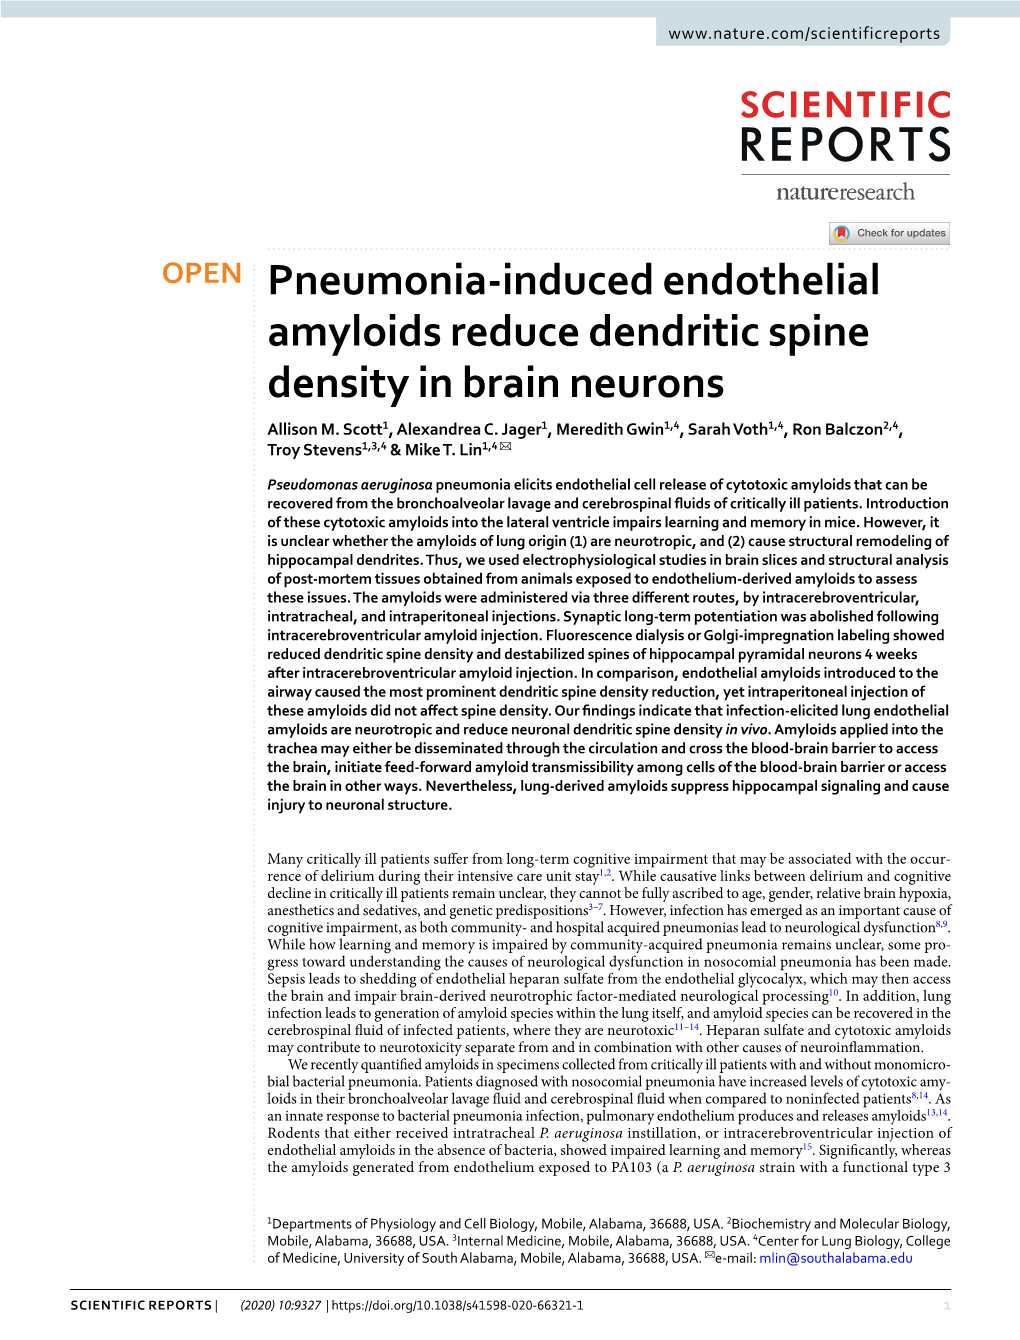 Pneumonia-Induced Endothelial Amyloids Reduce Dendritic Spine Density in Brain Neurons Allison M